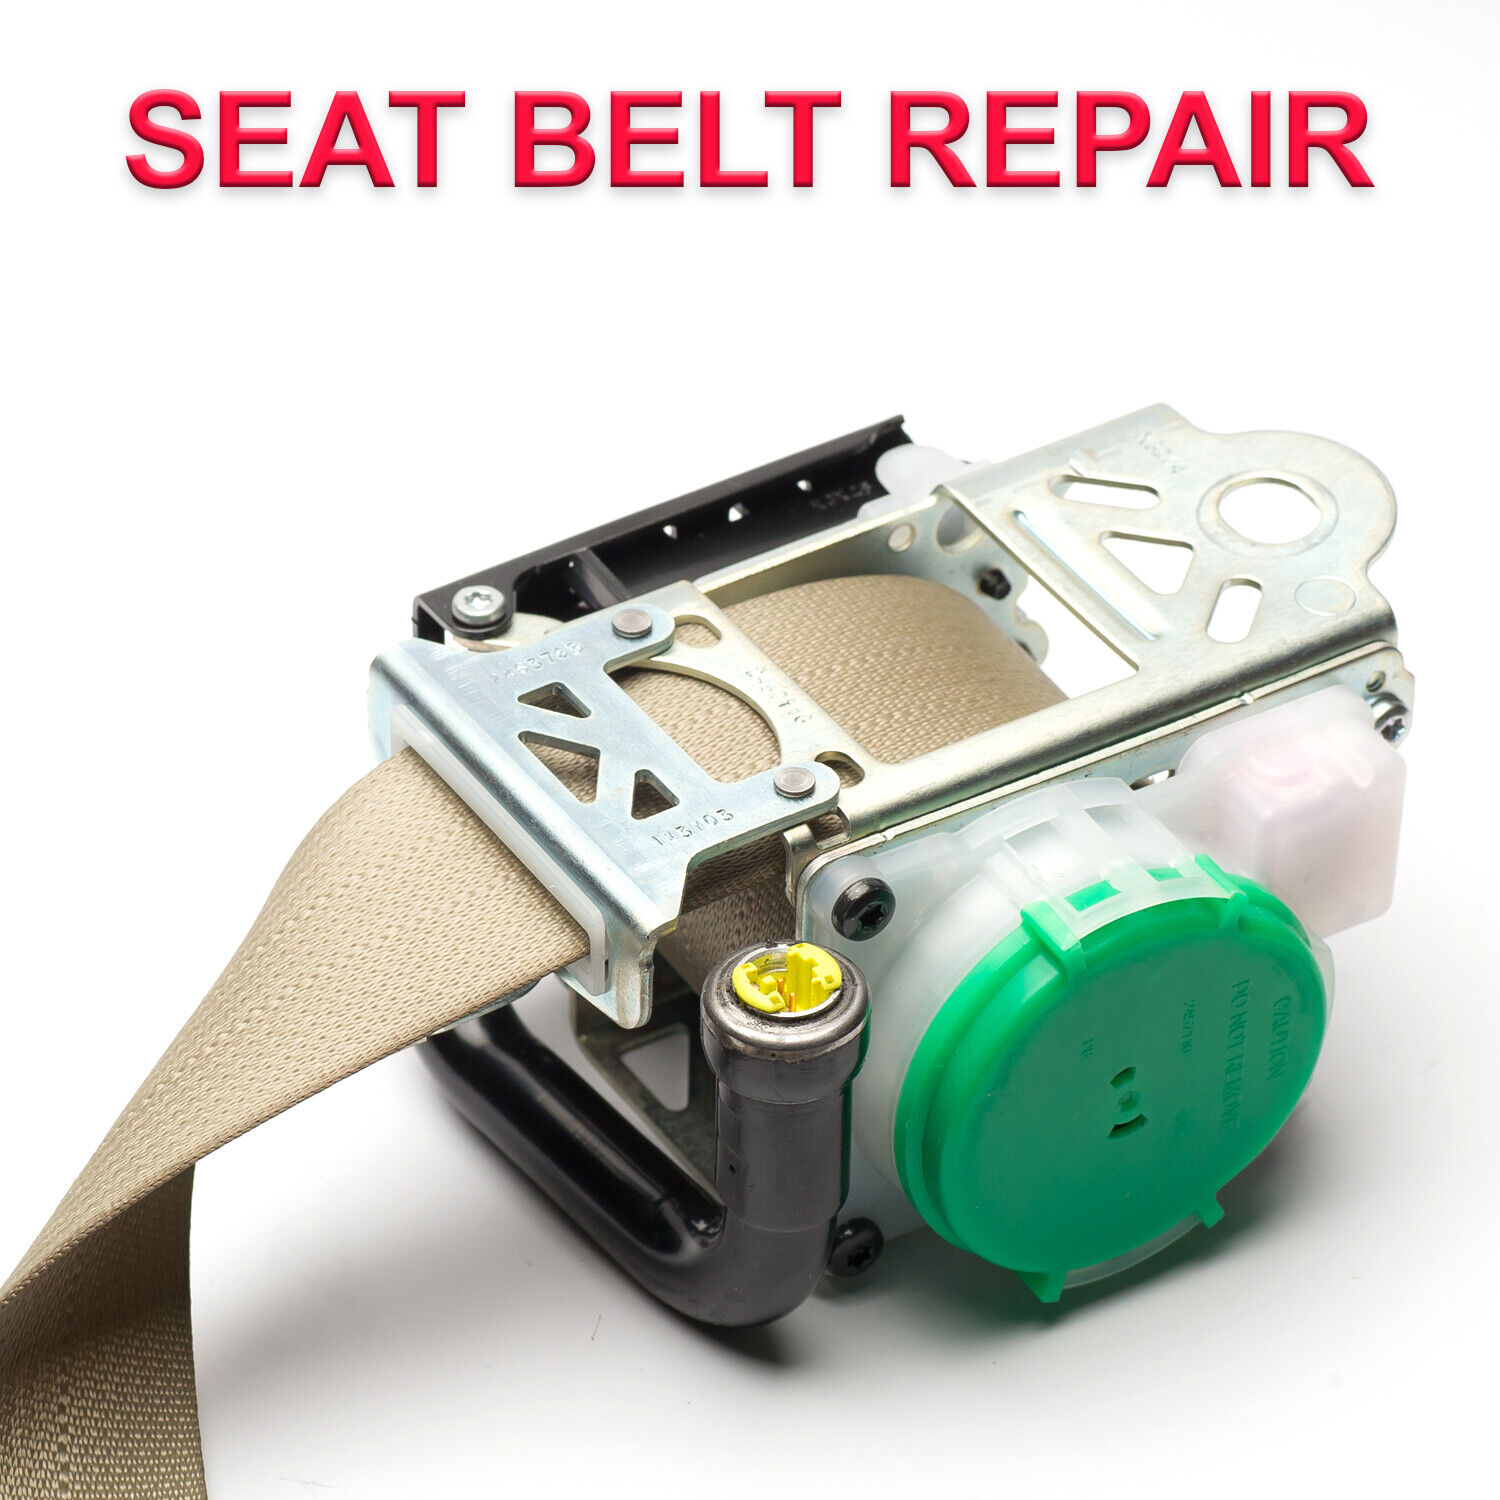 For Audi Q7 Single Stage Seat Belt Repair